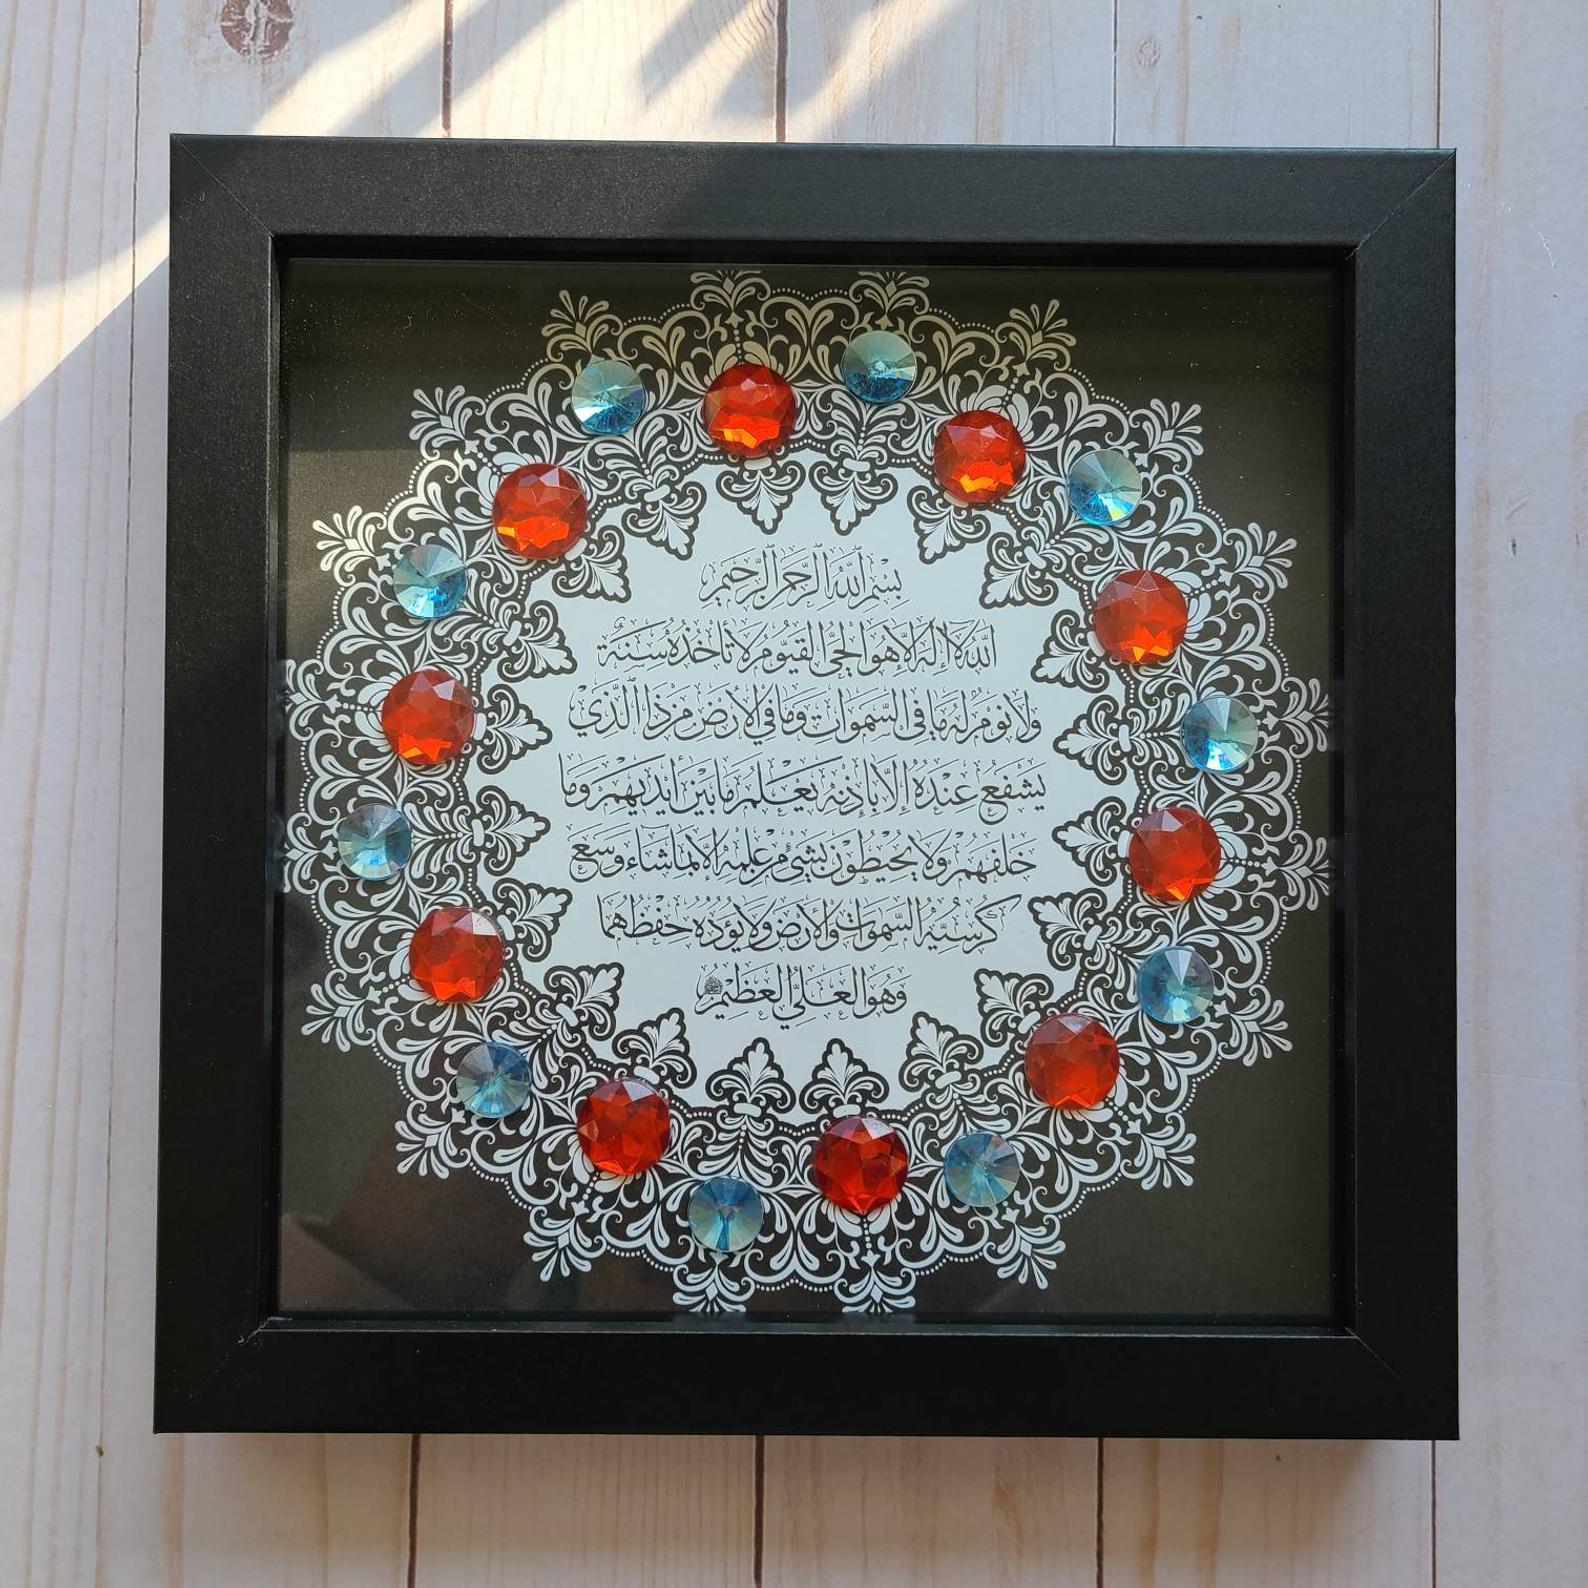 Ayat alkursi Islamic Art in a black shadowbox frame, ready to hang Modern Islamic Wall Art.